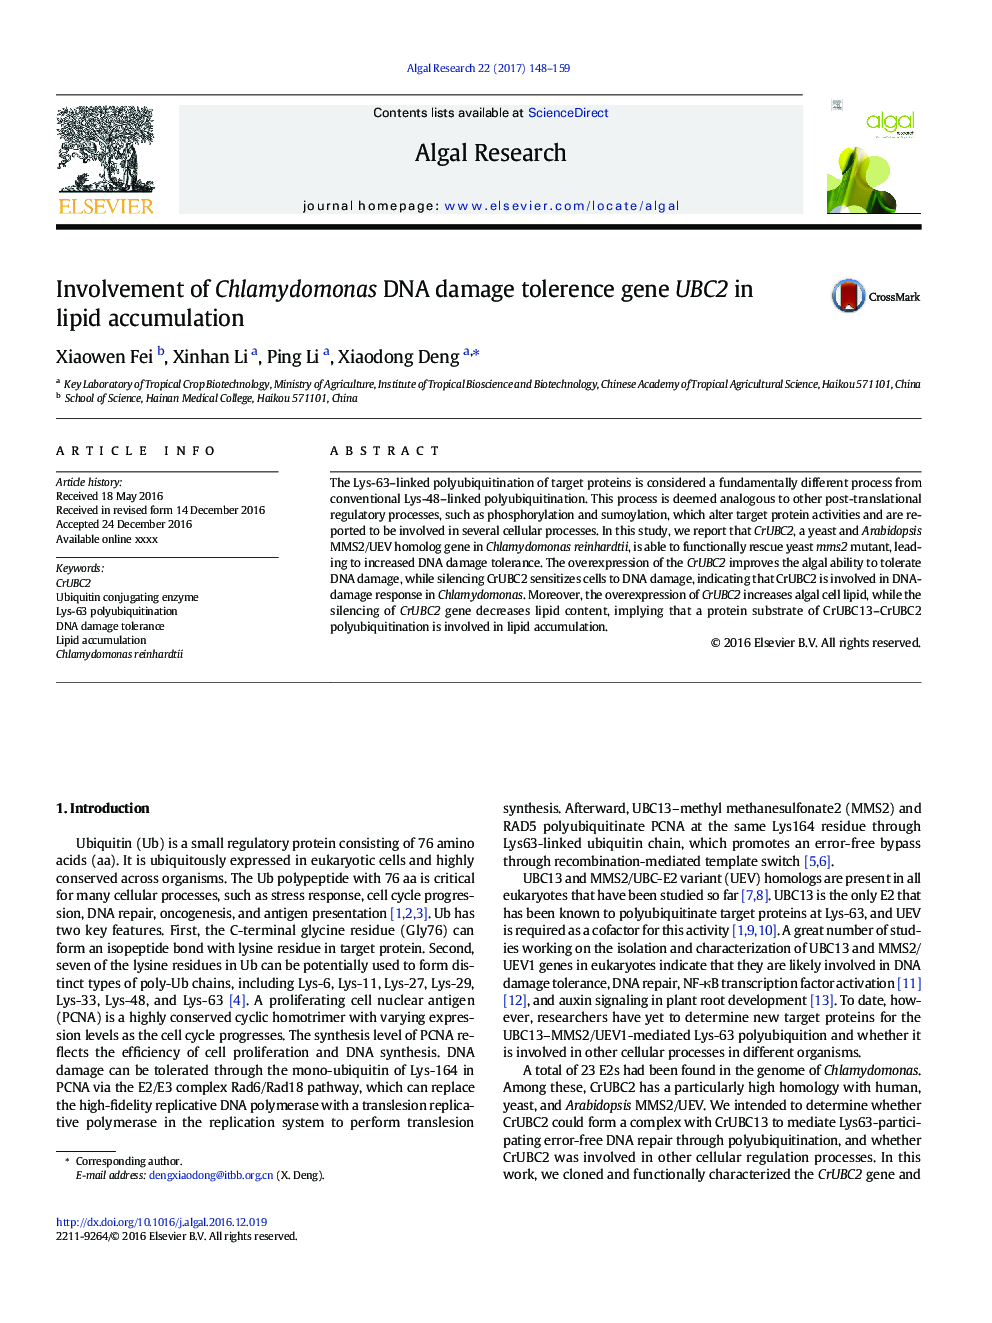 Involvement of Chlamydomonas DNA damage tolerence gene UBC2 in lipid accumulation